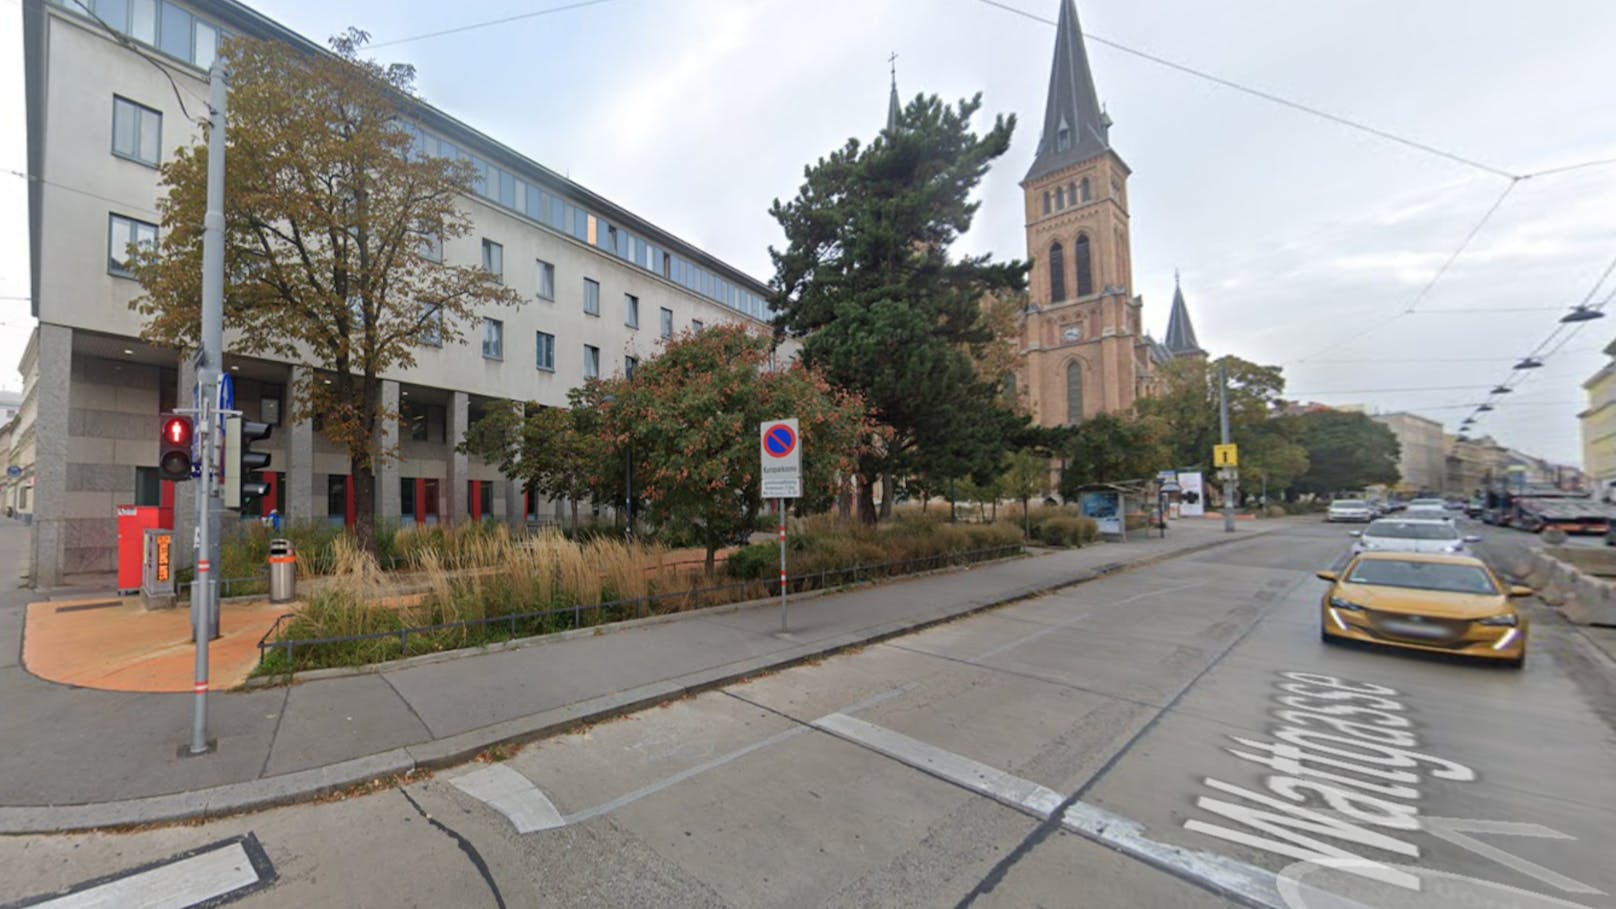 "Machma 1 gegen 1" – Mann attackiert Polizisten in Wien